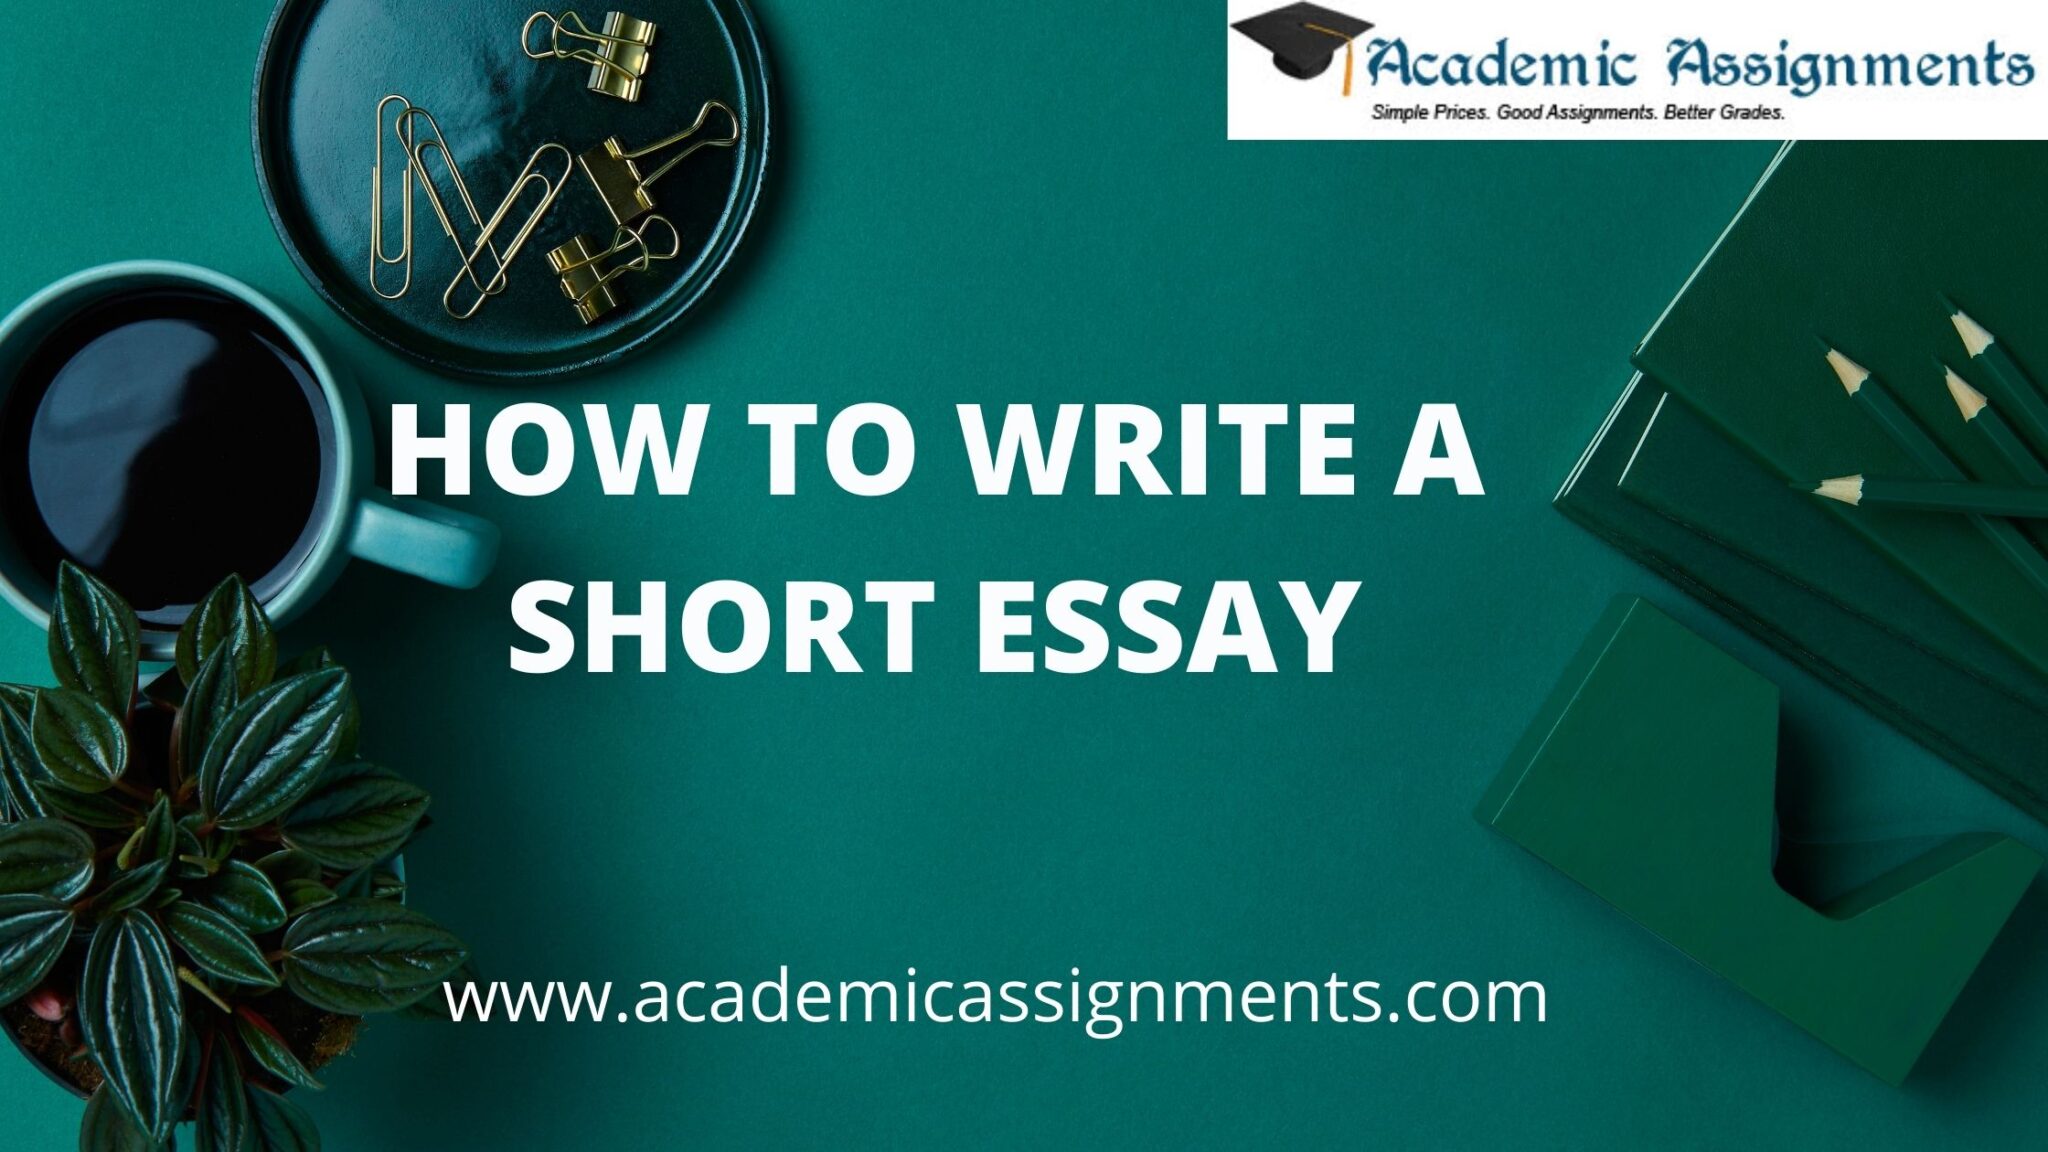 website to make essay shorter